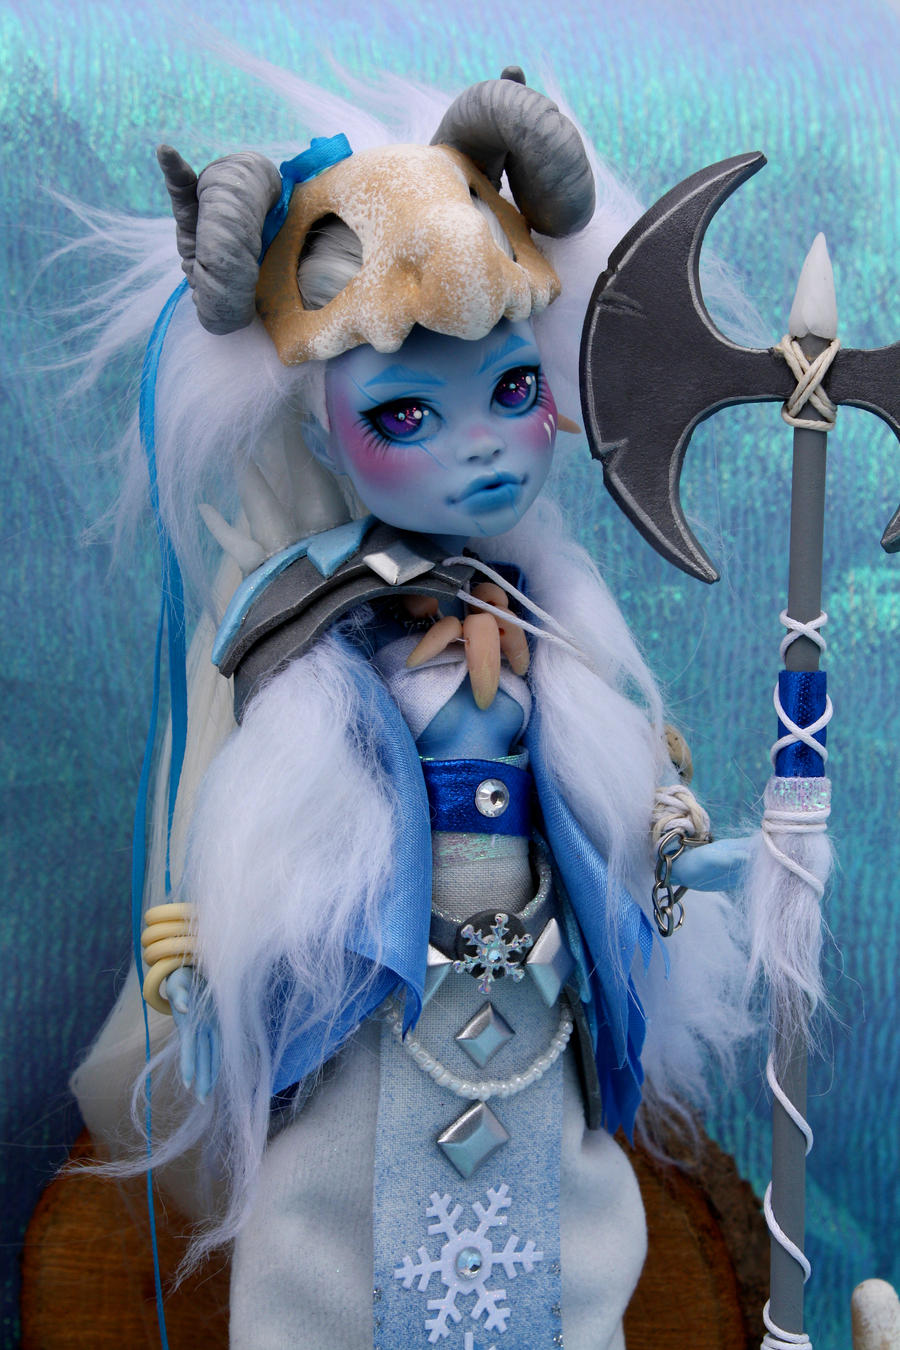 Jessica Gorgon Monster High Custom Doll by artchica83 on DeviantArt